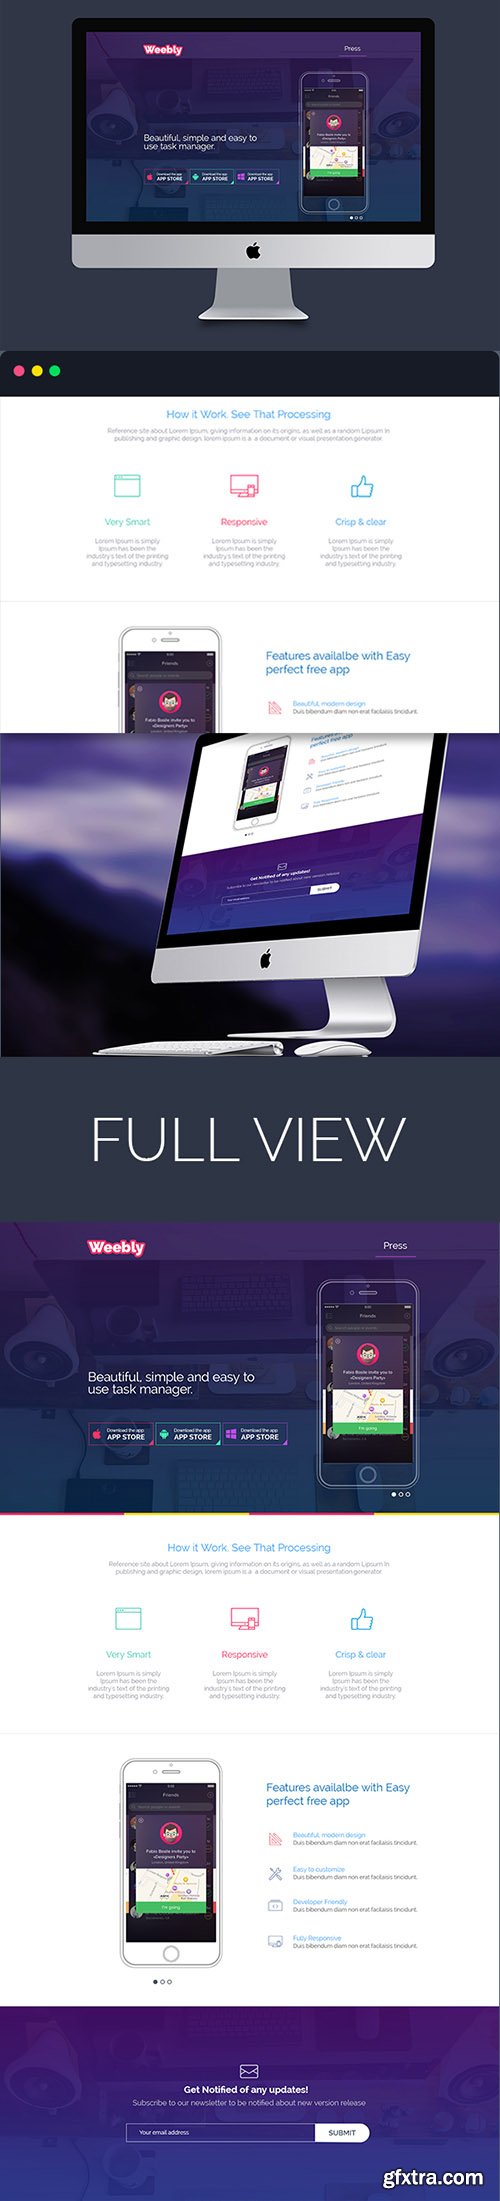 PSD Web Template - App Landing Page 2014